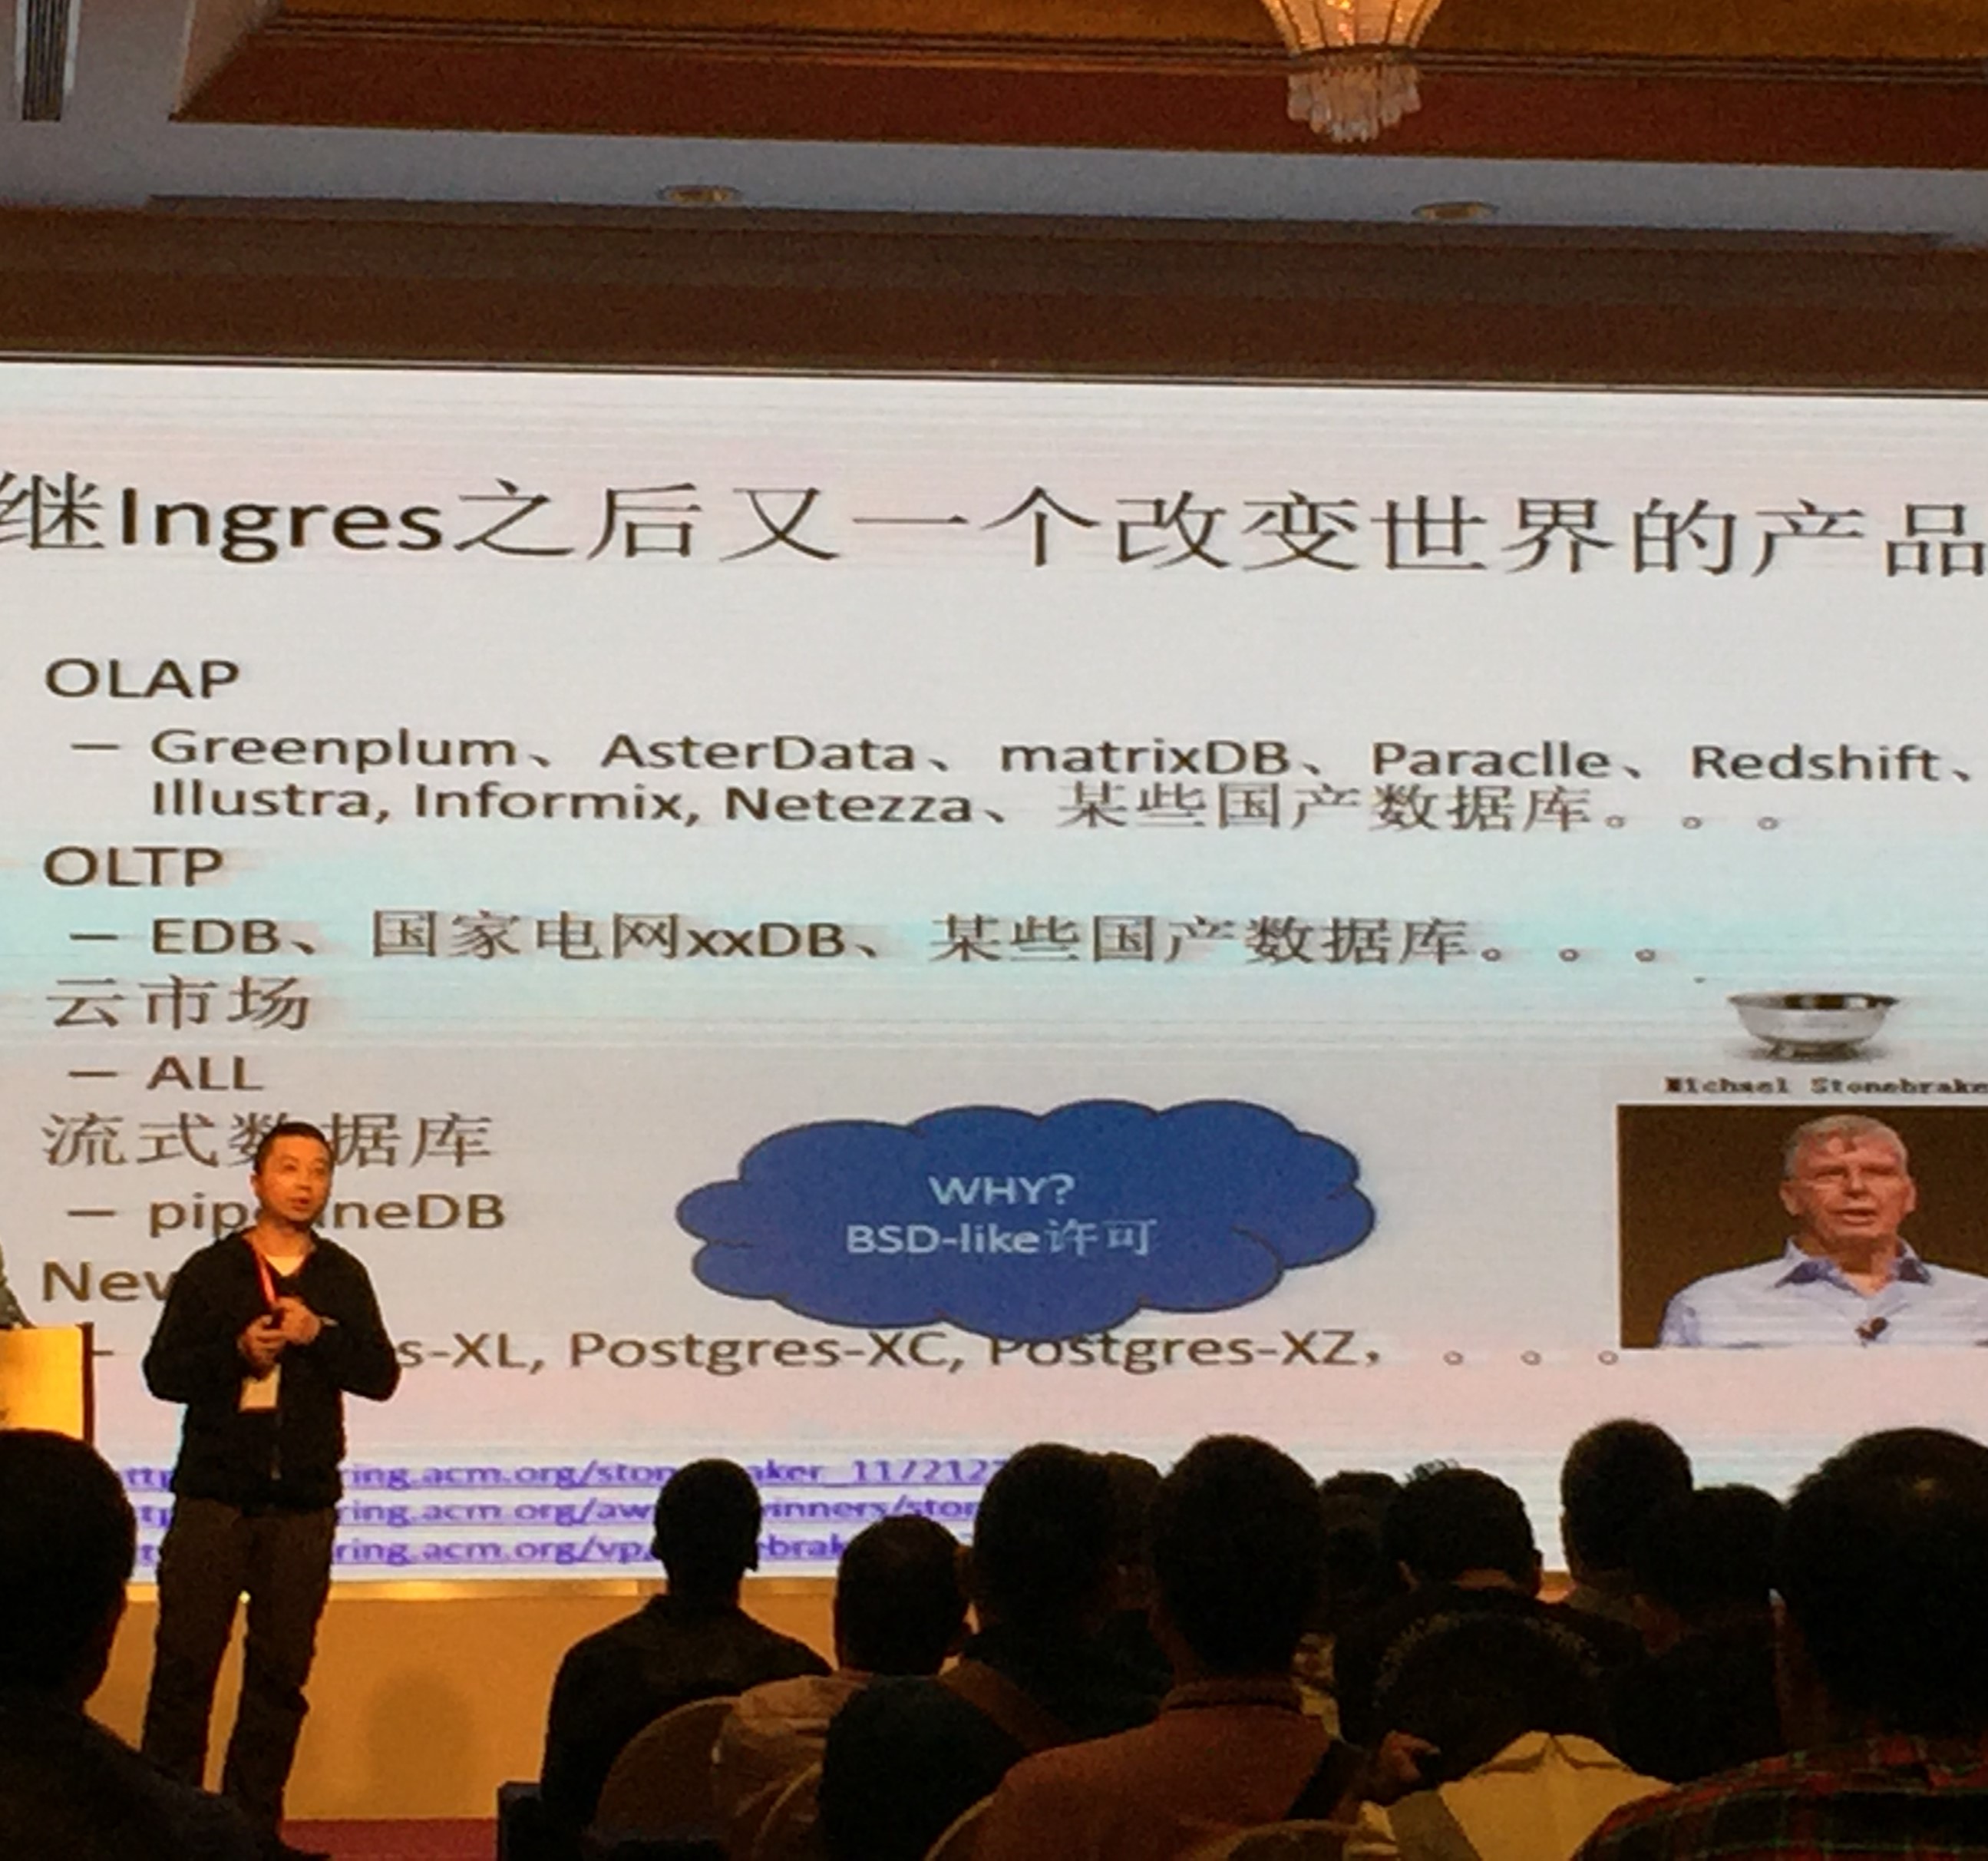 Zhou Zhengzhong 氏による基調講演: PostgreSQL の過去と現在